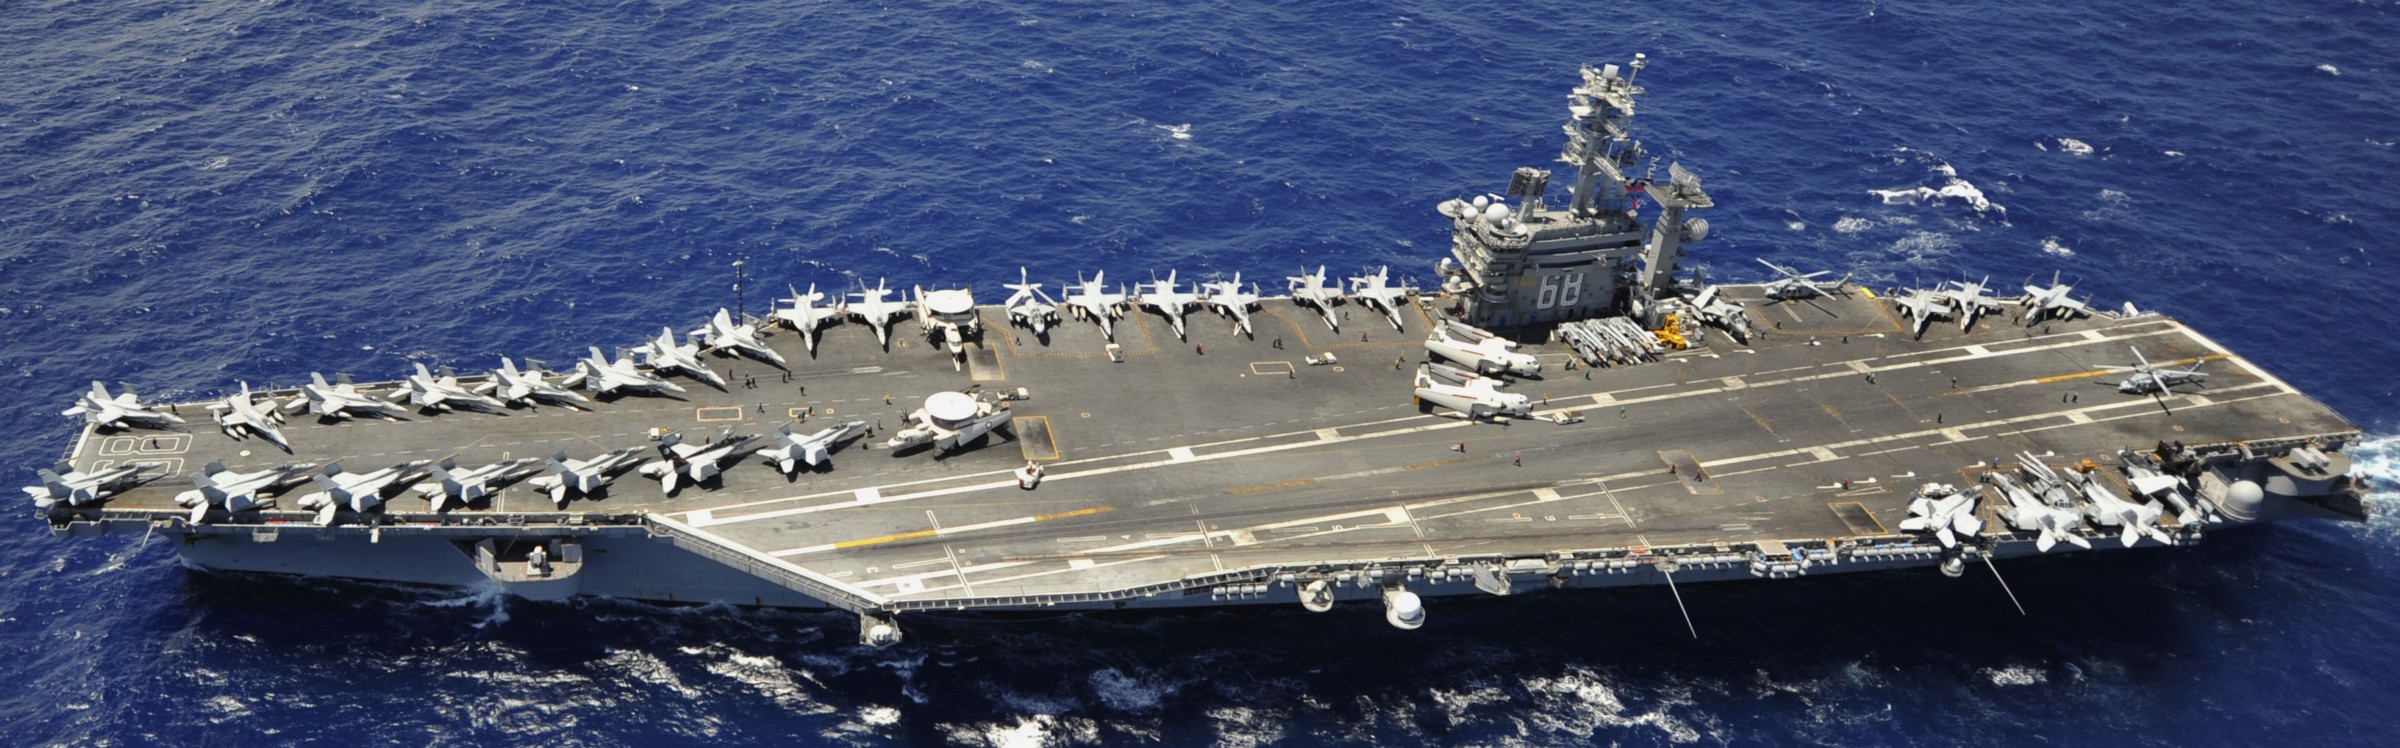 nimitz class aircraft carrier us navy cvn newport news virginia 195c